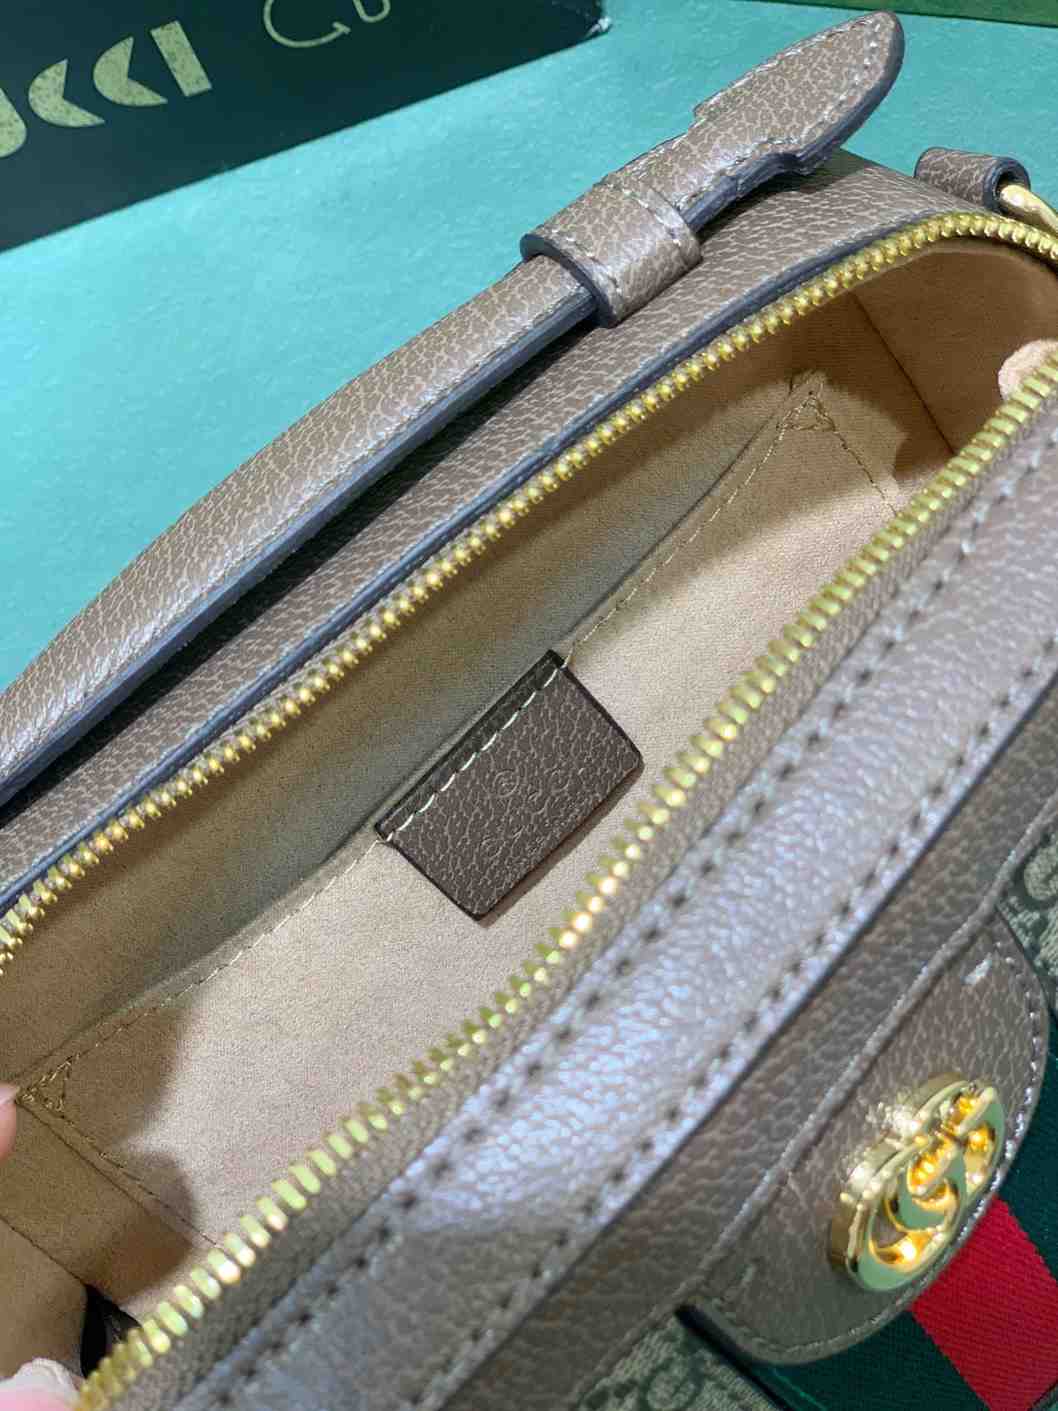 Gucci Ophidia Mini GG Shoulder Bag replica